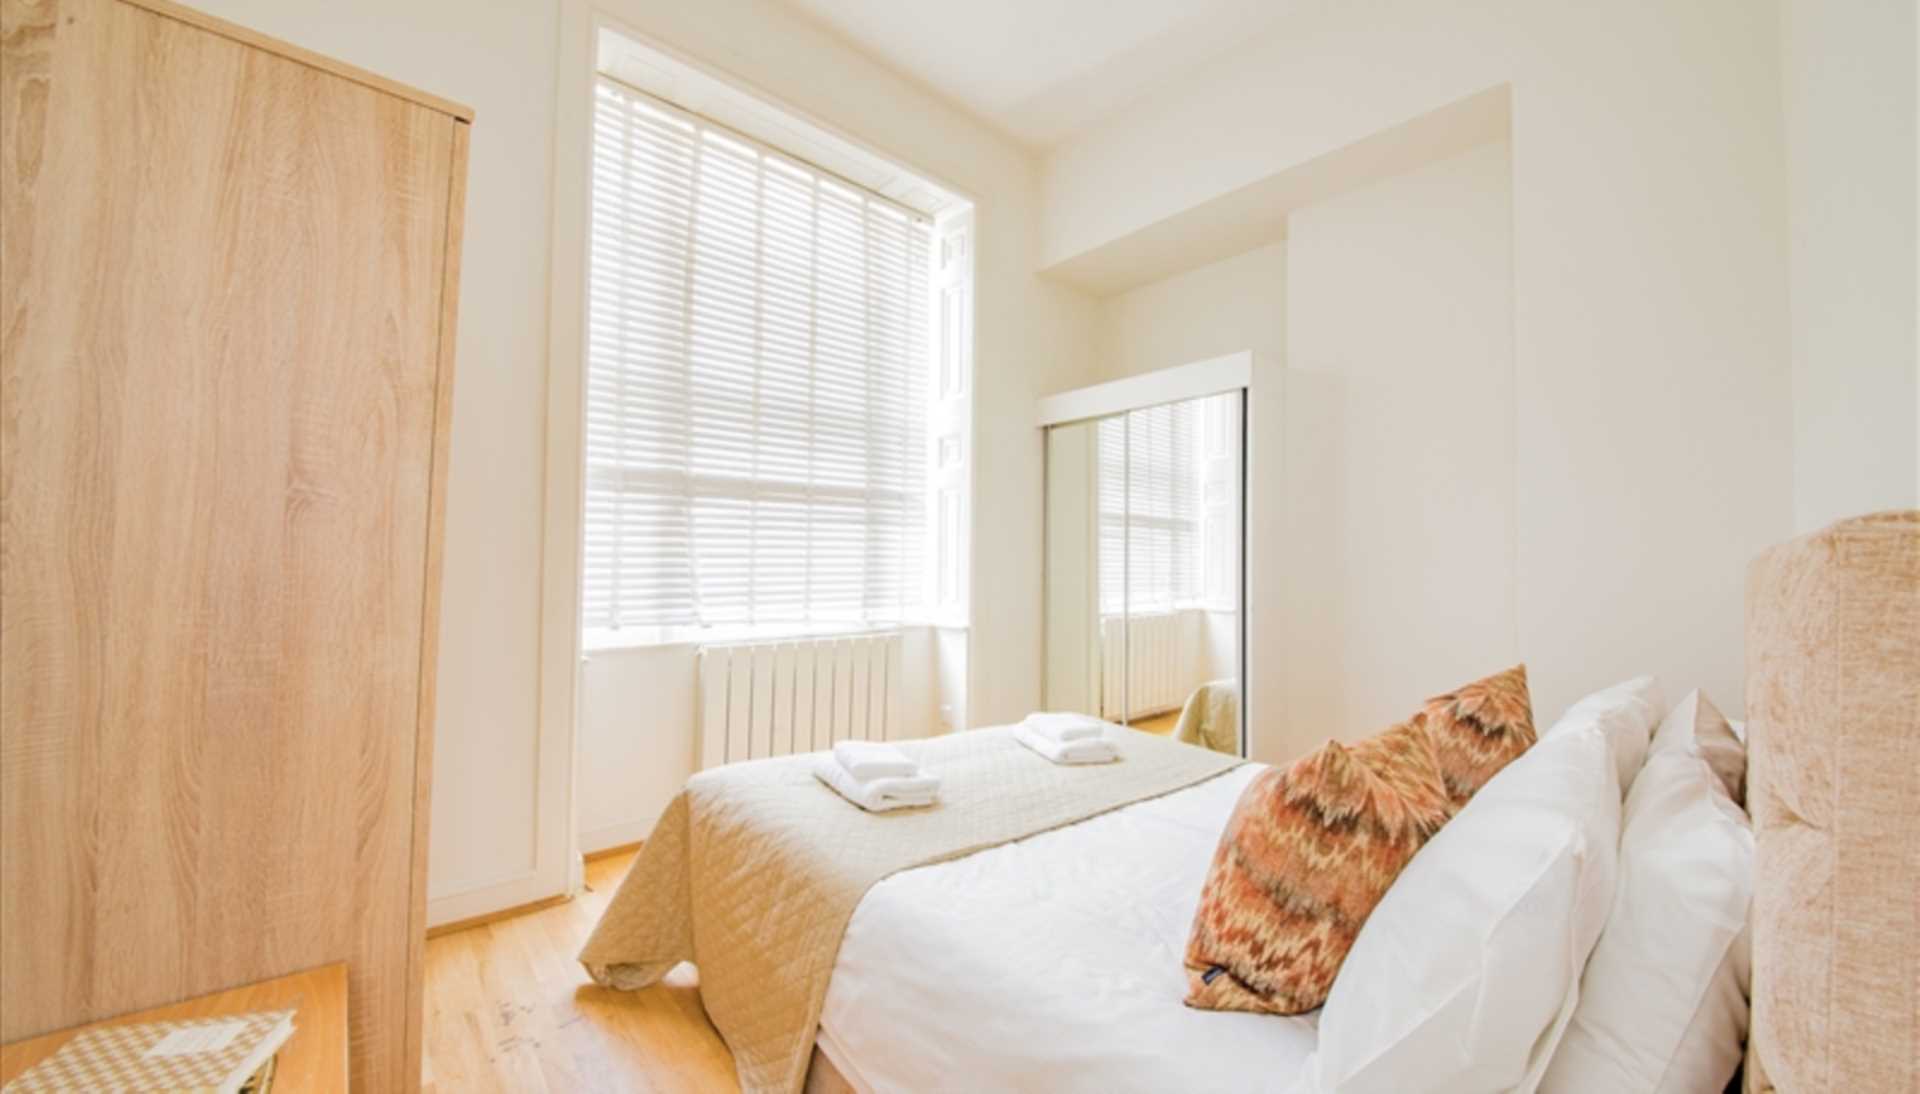 London W1U 5LU 2 bed flat rental property internal/external image-2